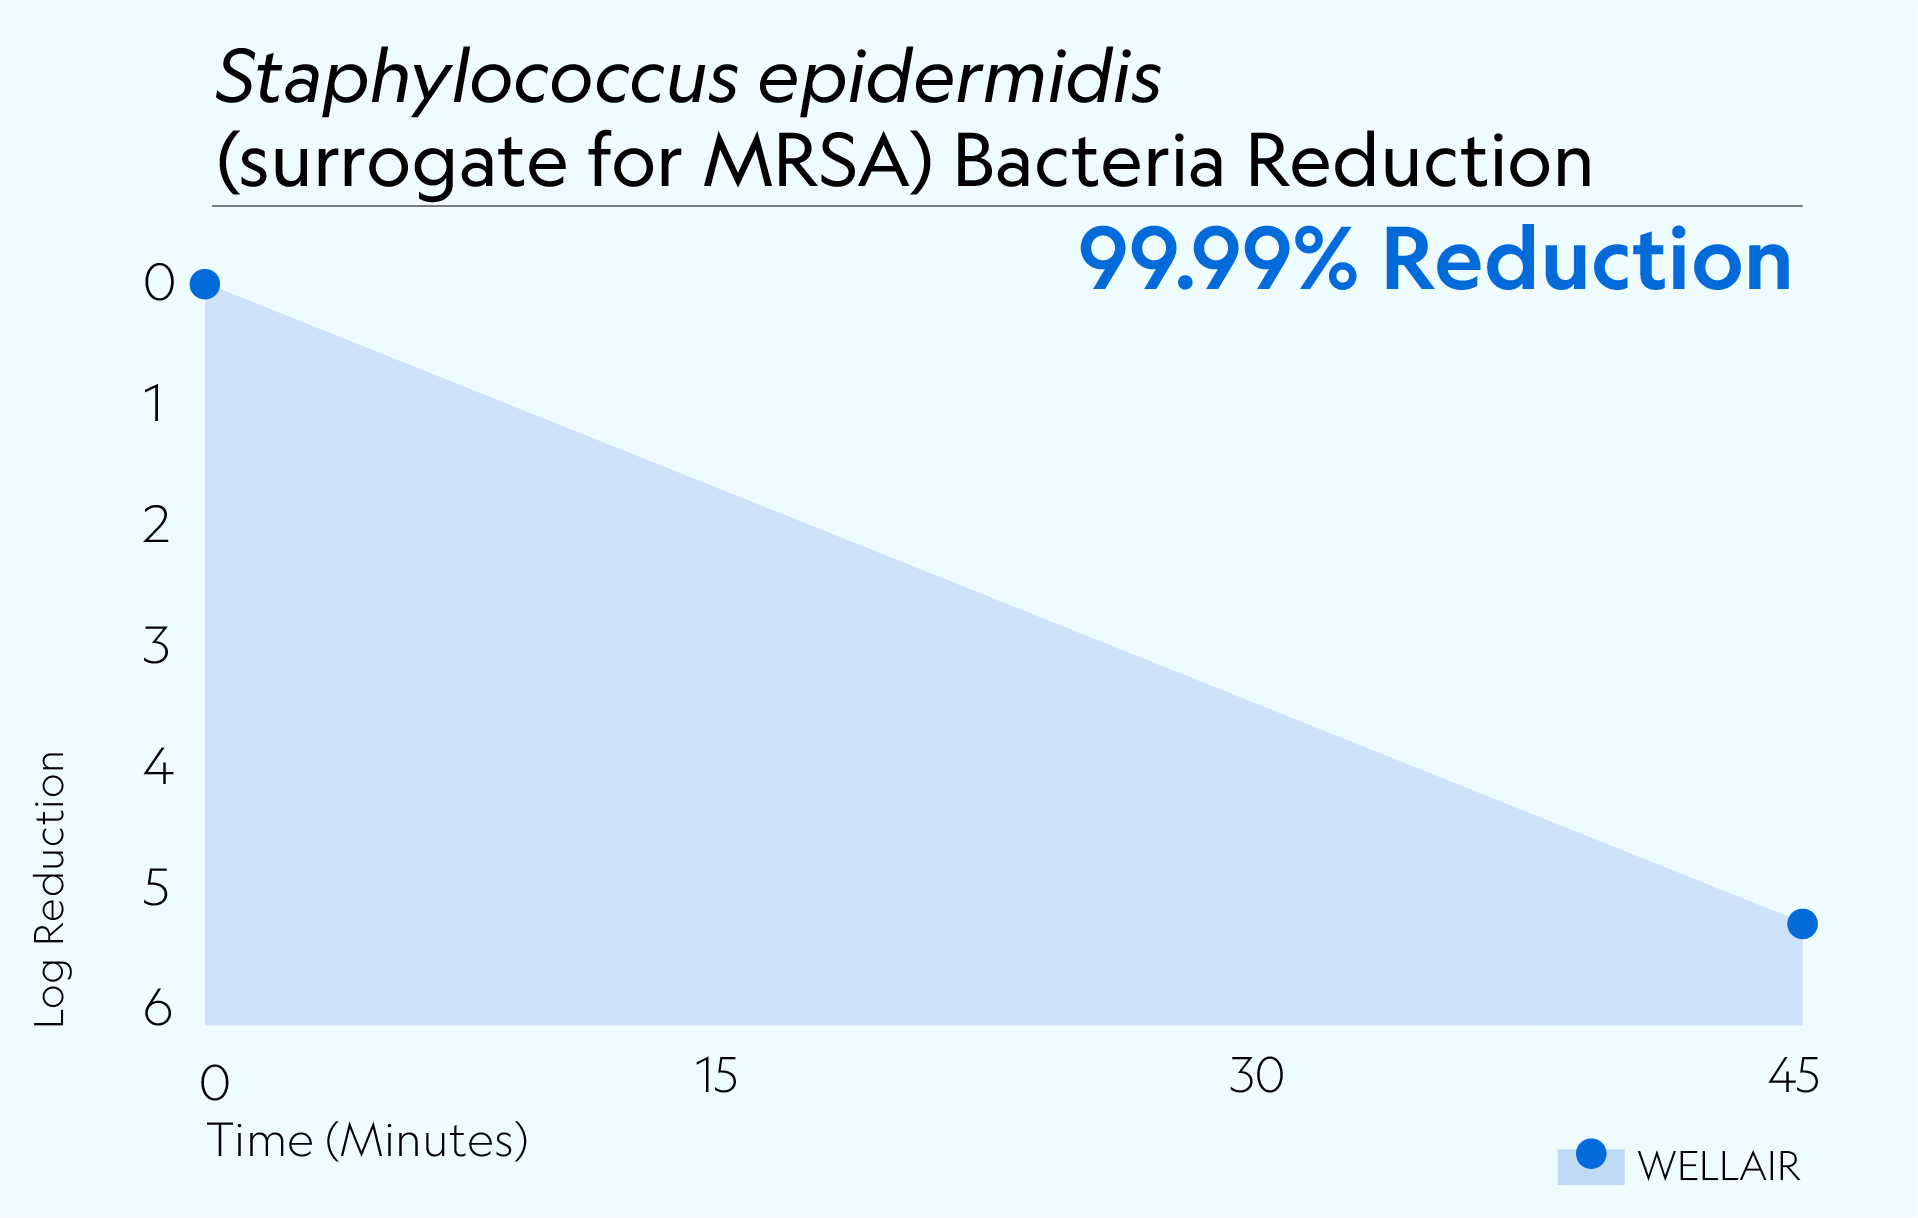 Defend 400 achieved 99.99% reduction of MRSA surrogate